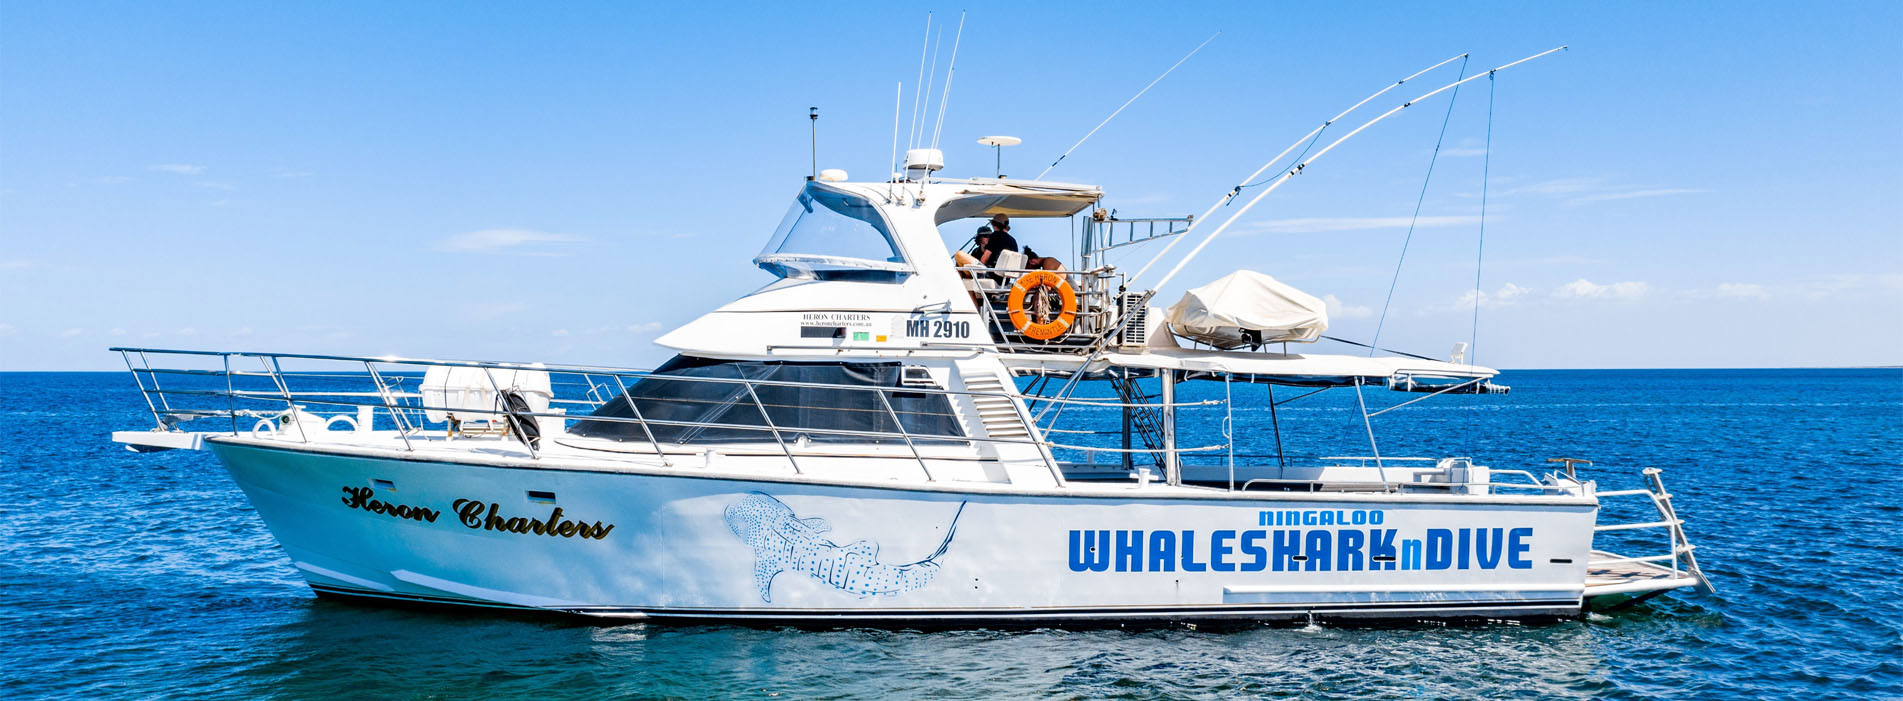 HERON Whaleshark swim dive boat Ningaloo